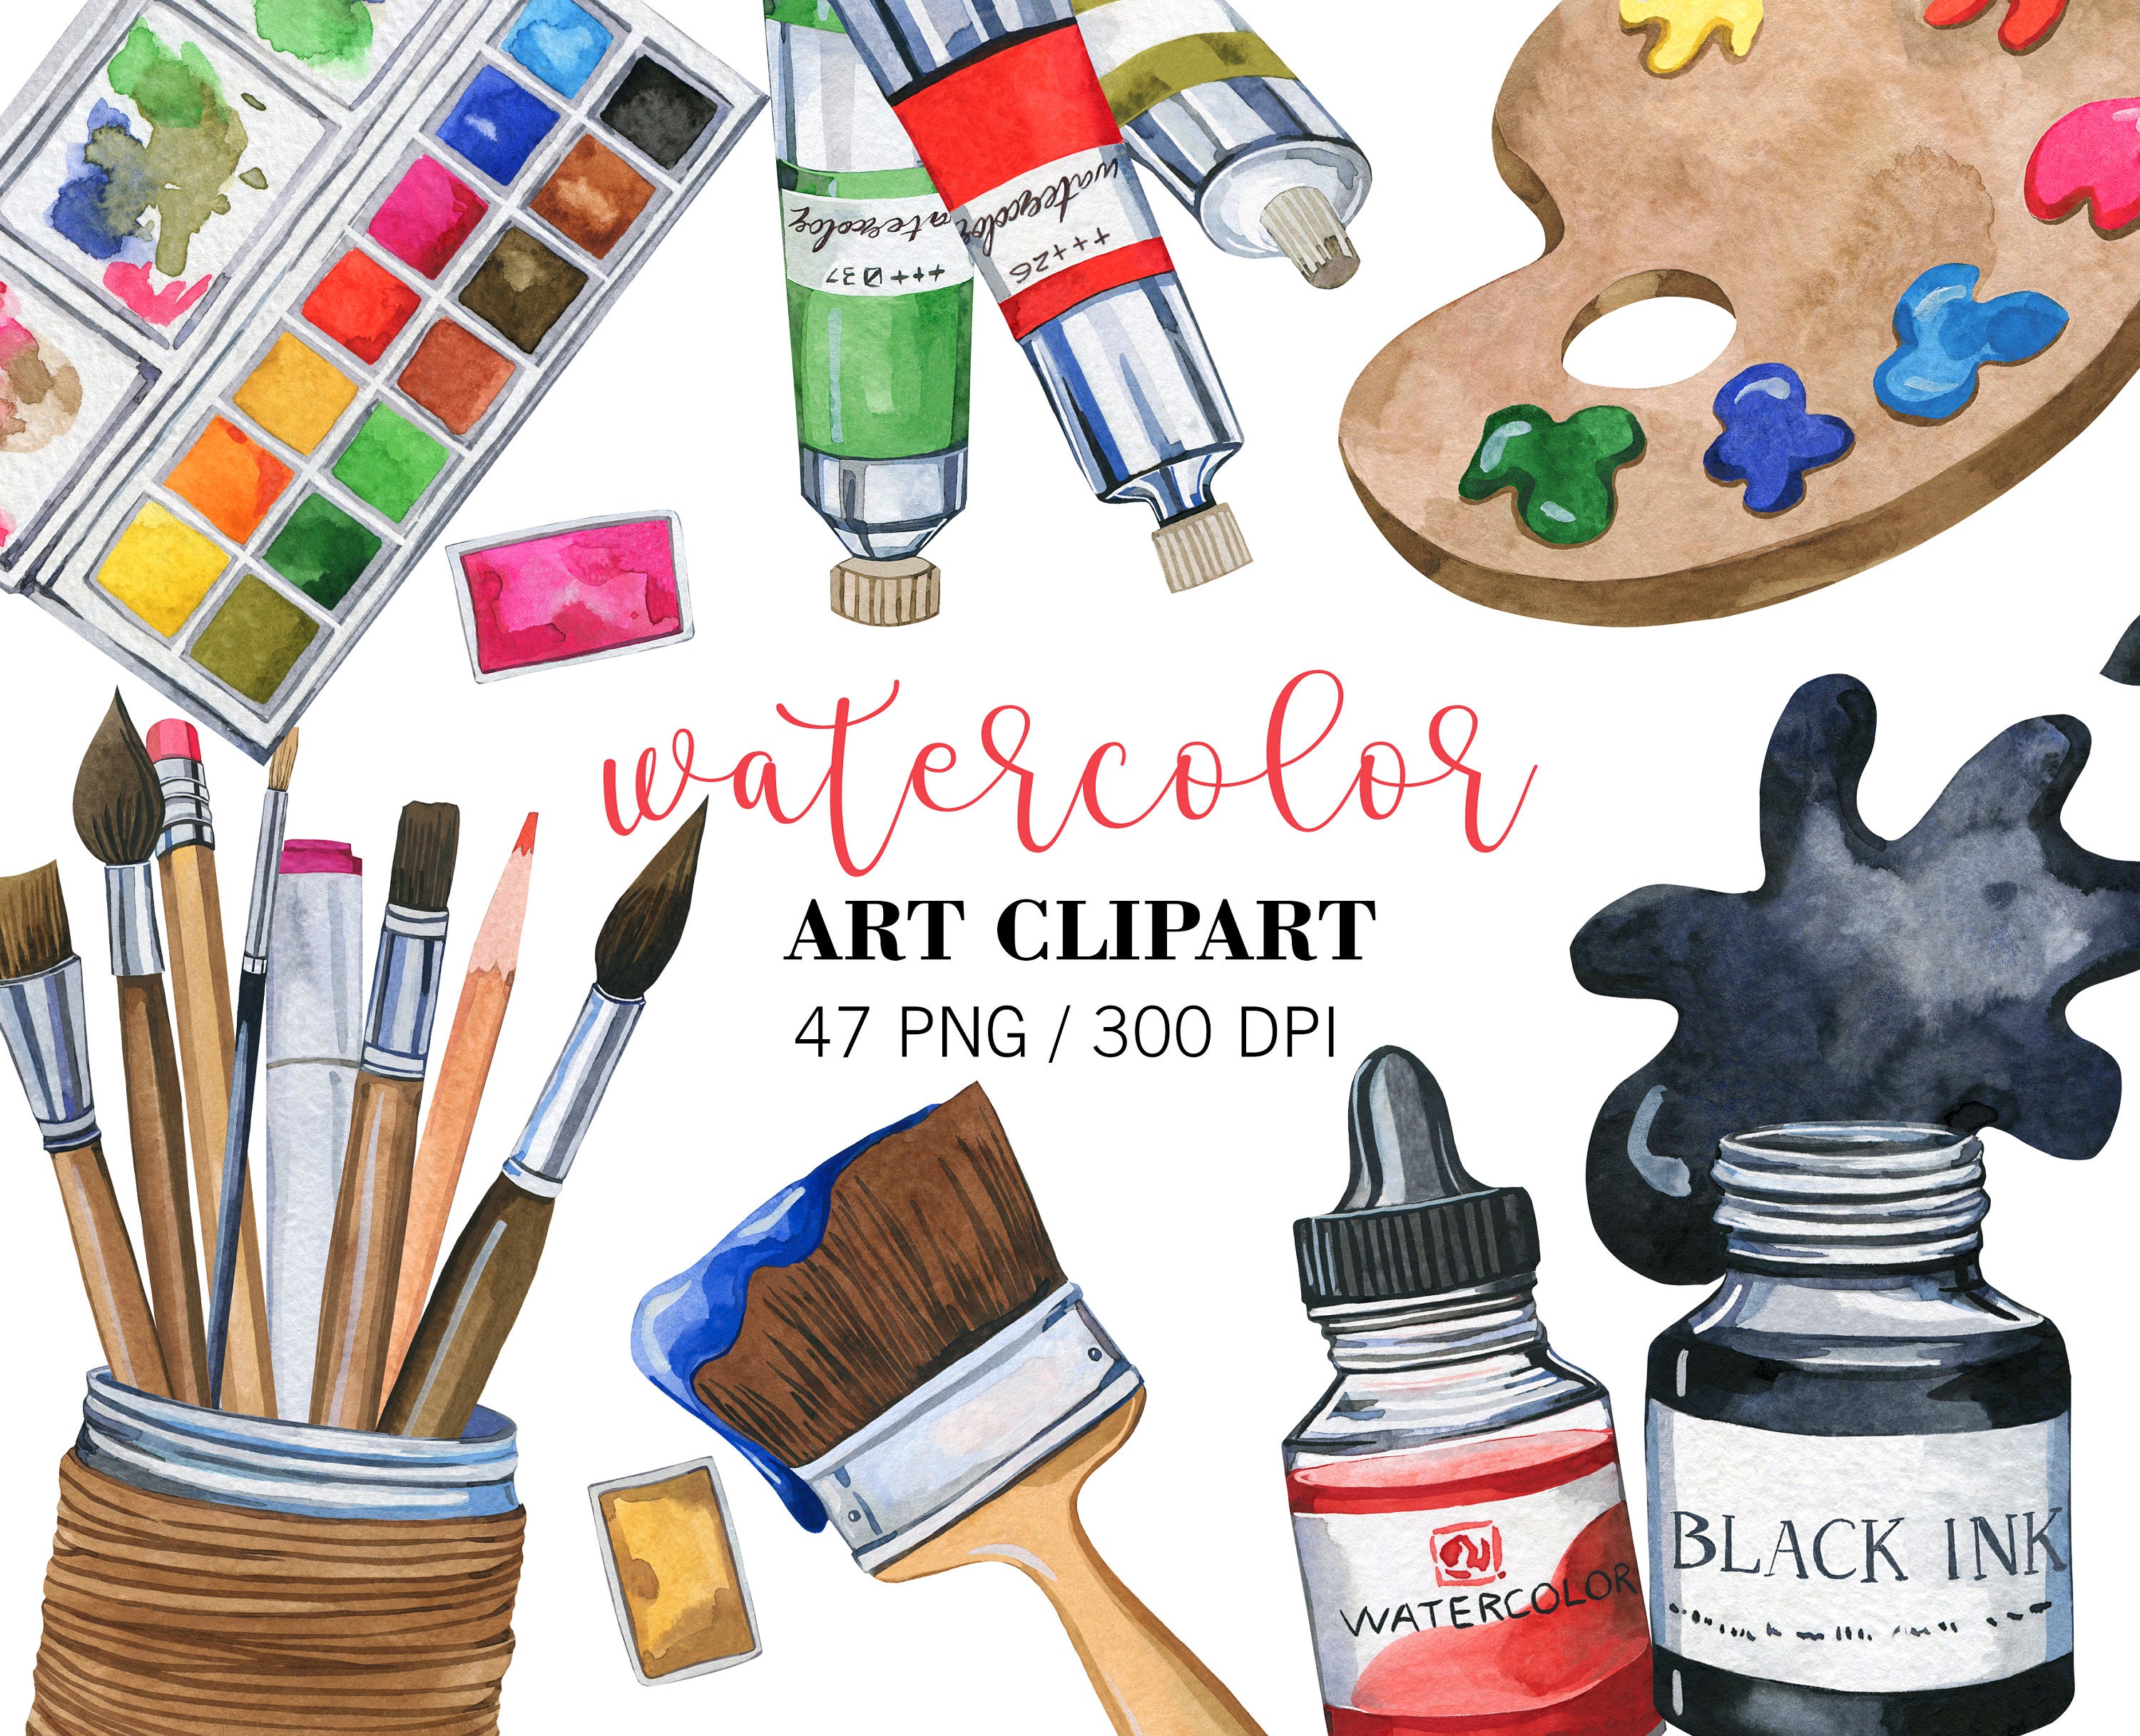 Watercolor Clip Art: Art Supplies — Heather Tycksen